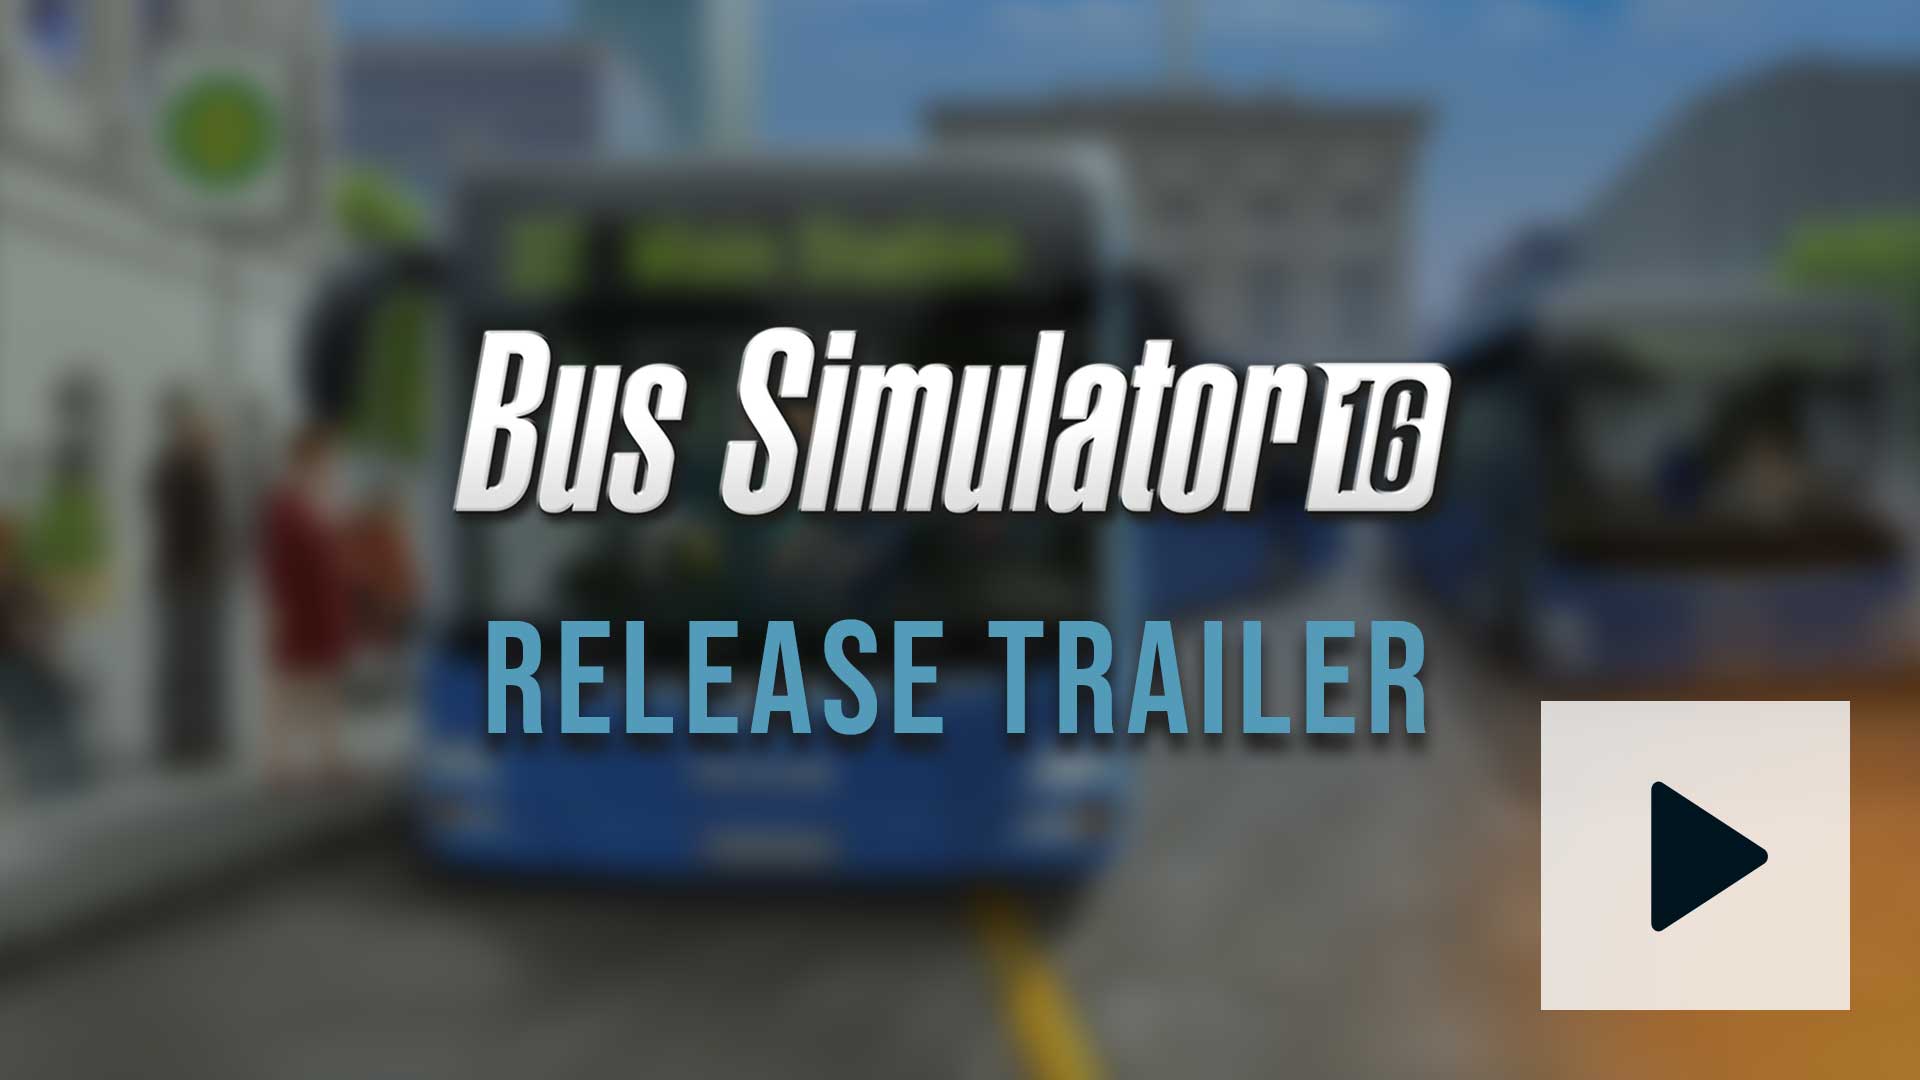 Bus Simulator 16 - Release Trailer